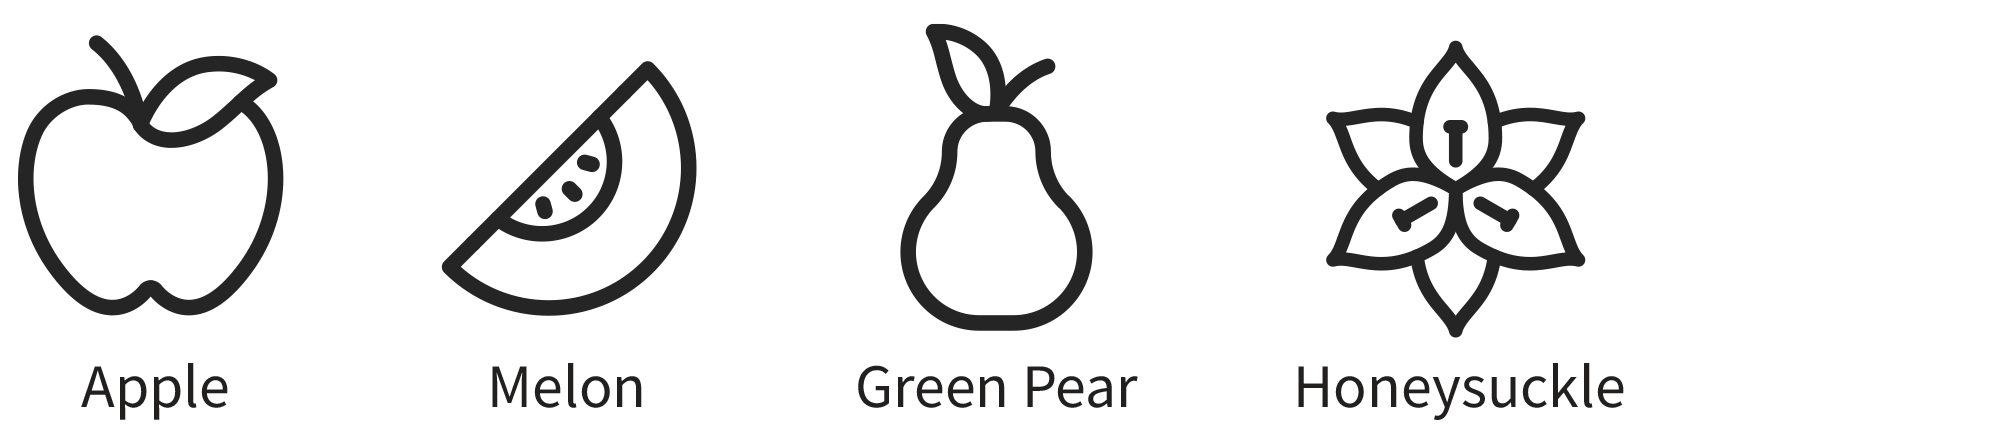 apple, melon, green pear, honeysuckle